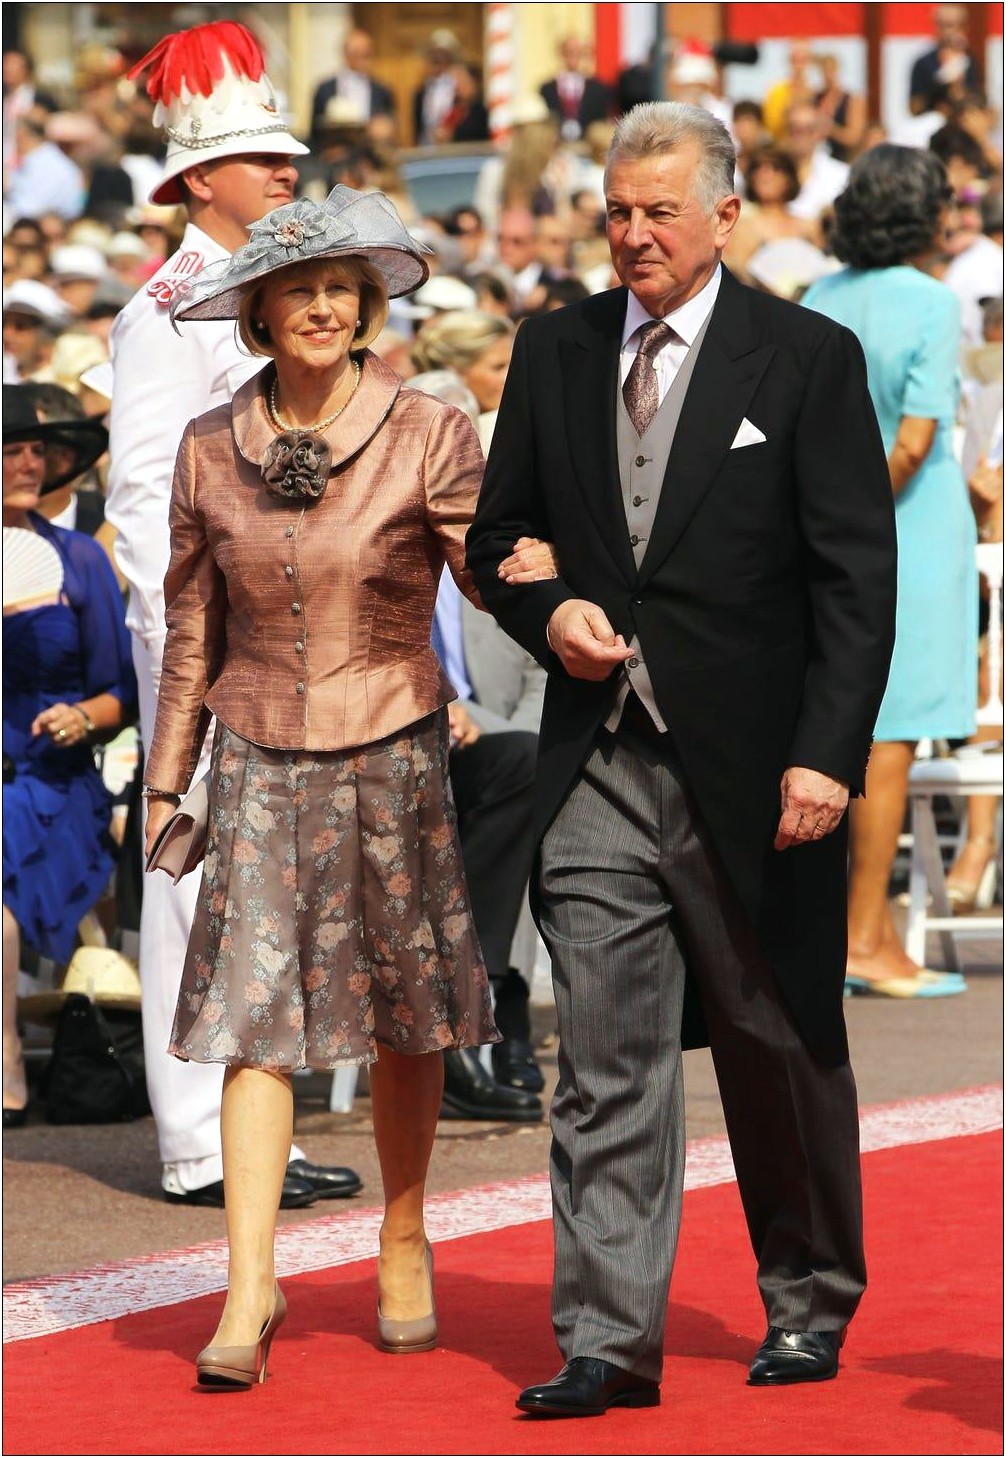 Do British Royal Weddings Invite Presidents